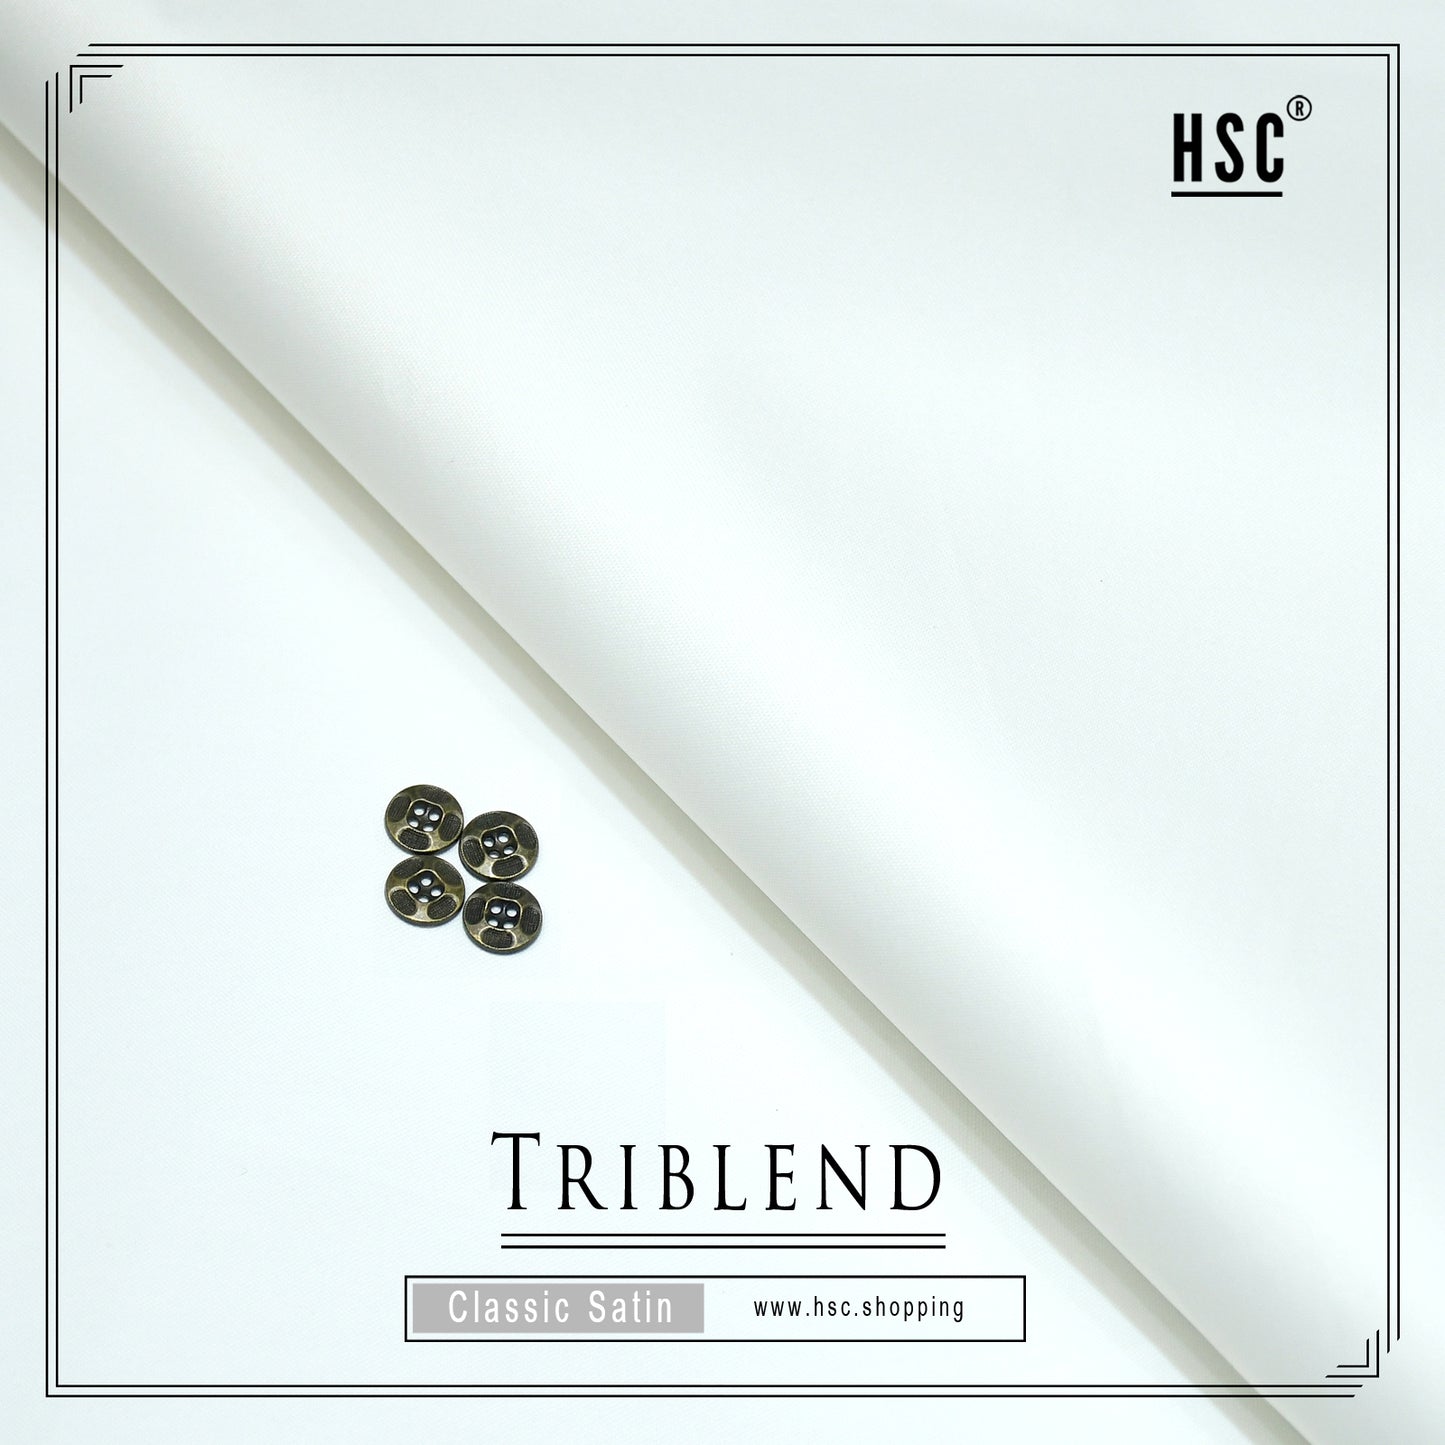 Buy 1 Get 1 Free Triblend Classic Satin - TS3 HSC